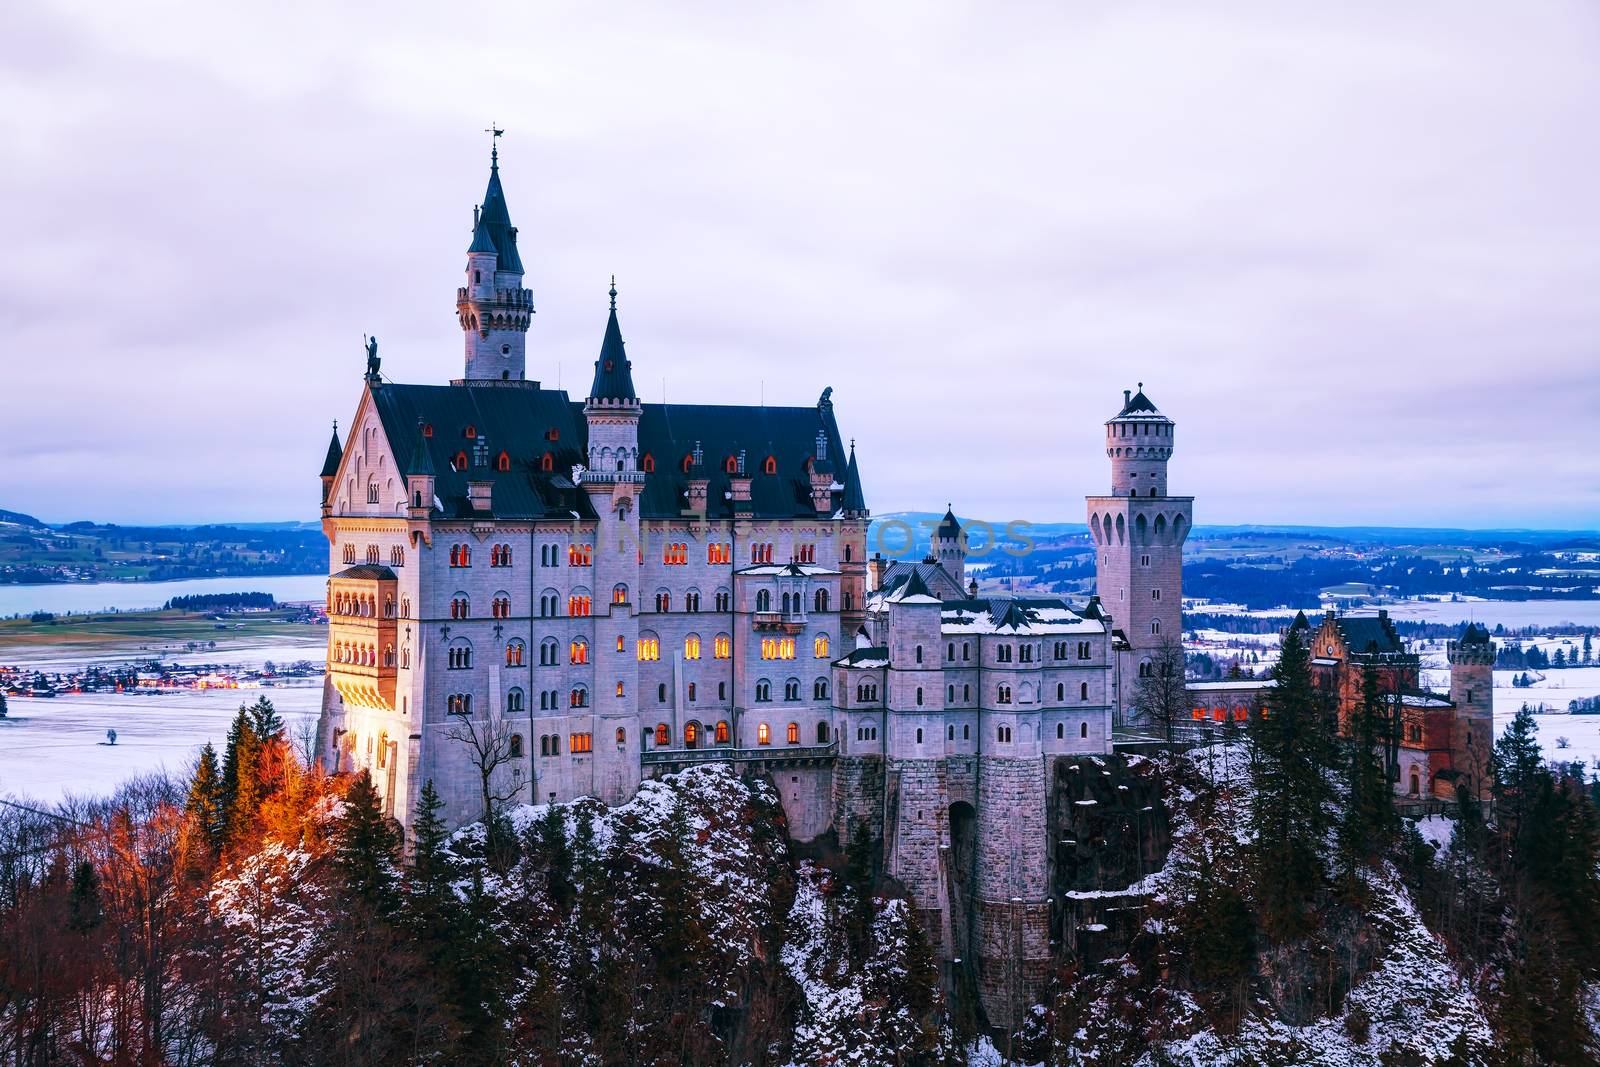 Neuschwanstein castle in Bavaria, Germany by AndreyKr